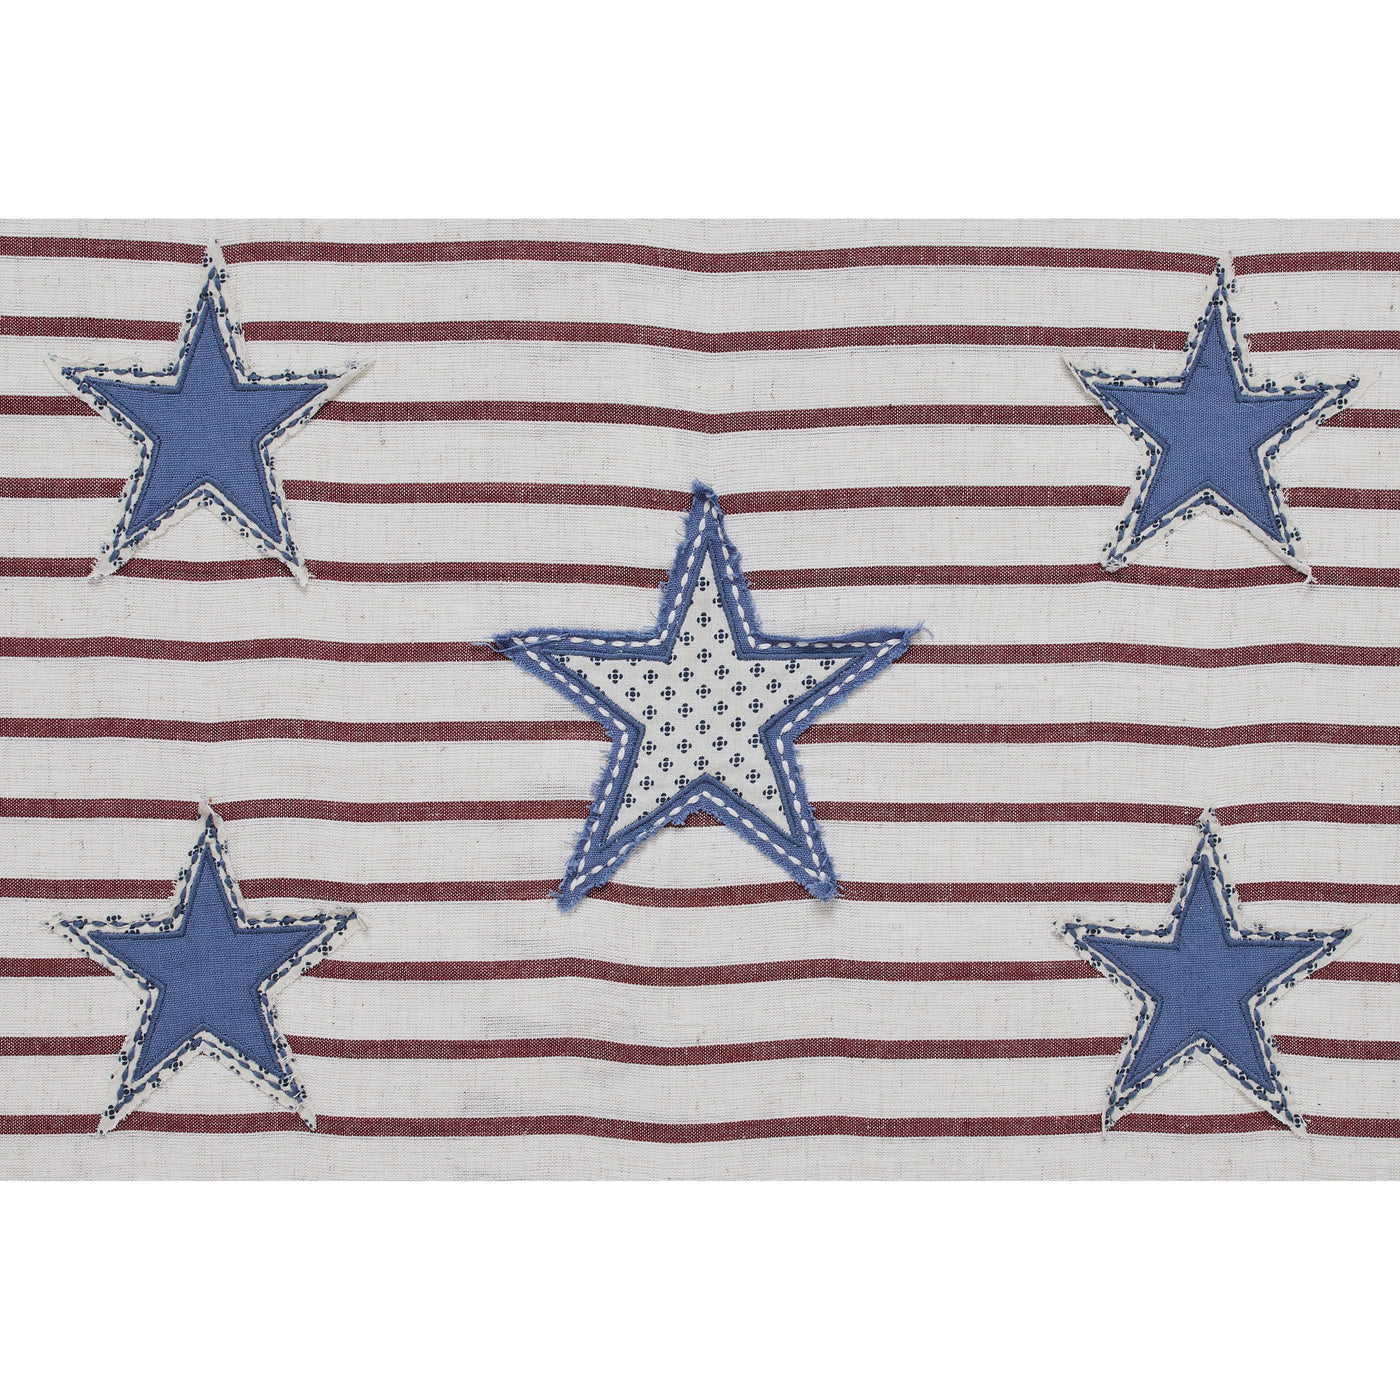 Americana Celebration Star Applique Accent Pillow